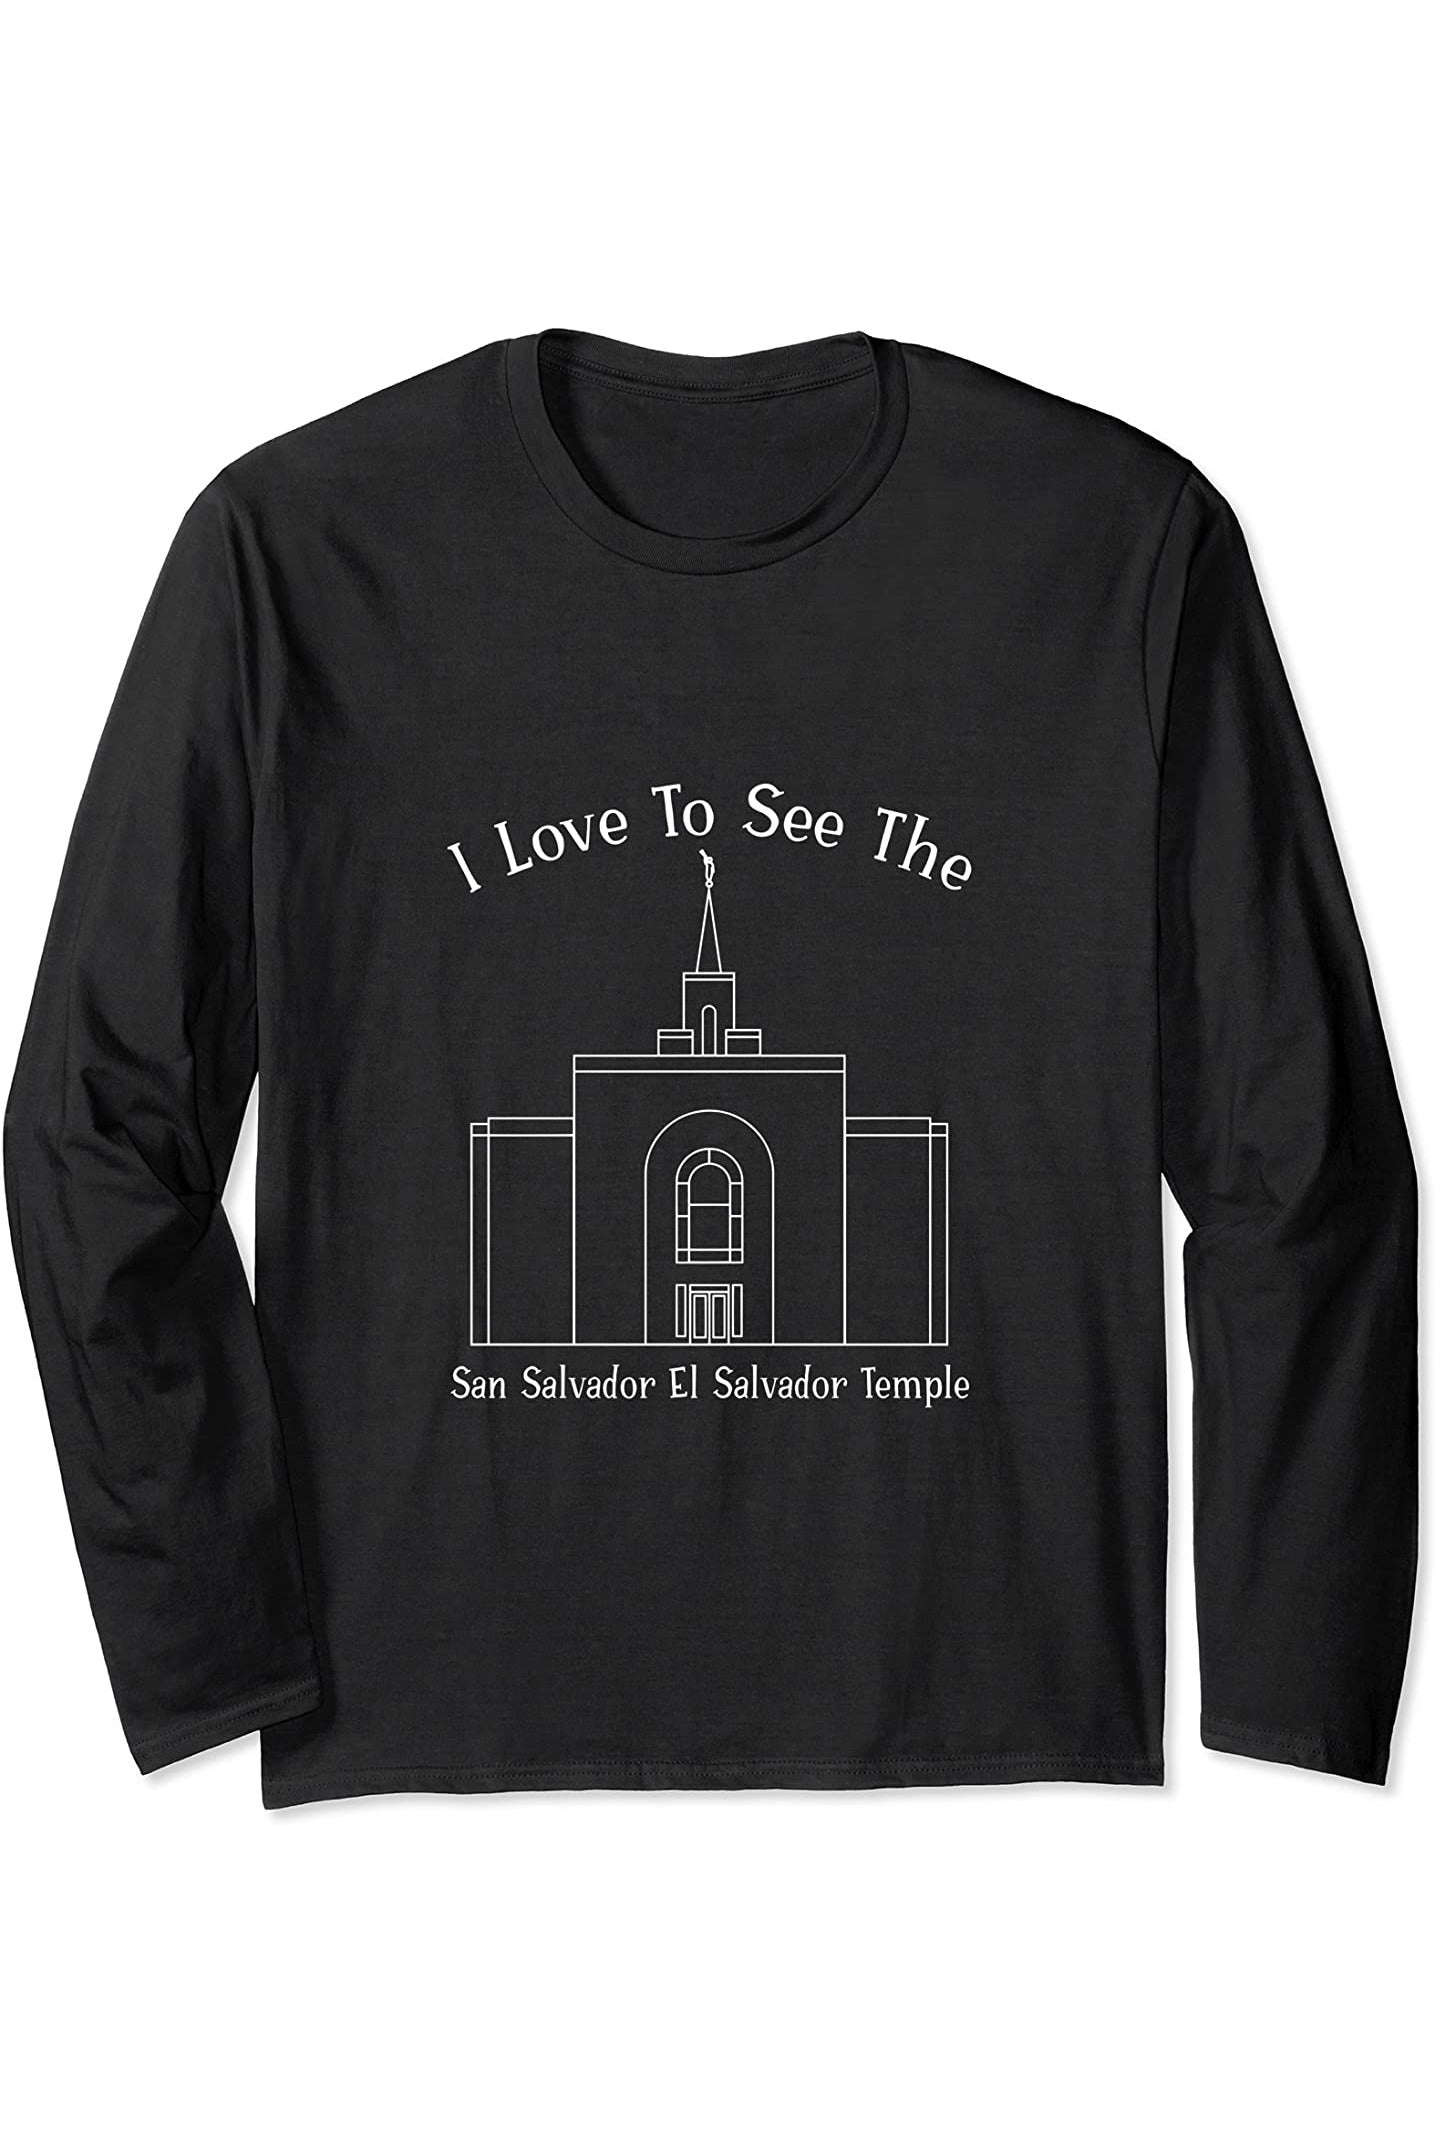 San Salvador El Salvador Temple Long Sleeve T-Shirt - Happy Style (English) US